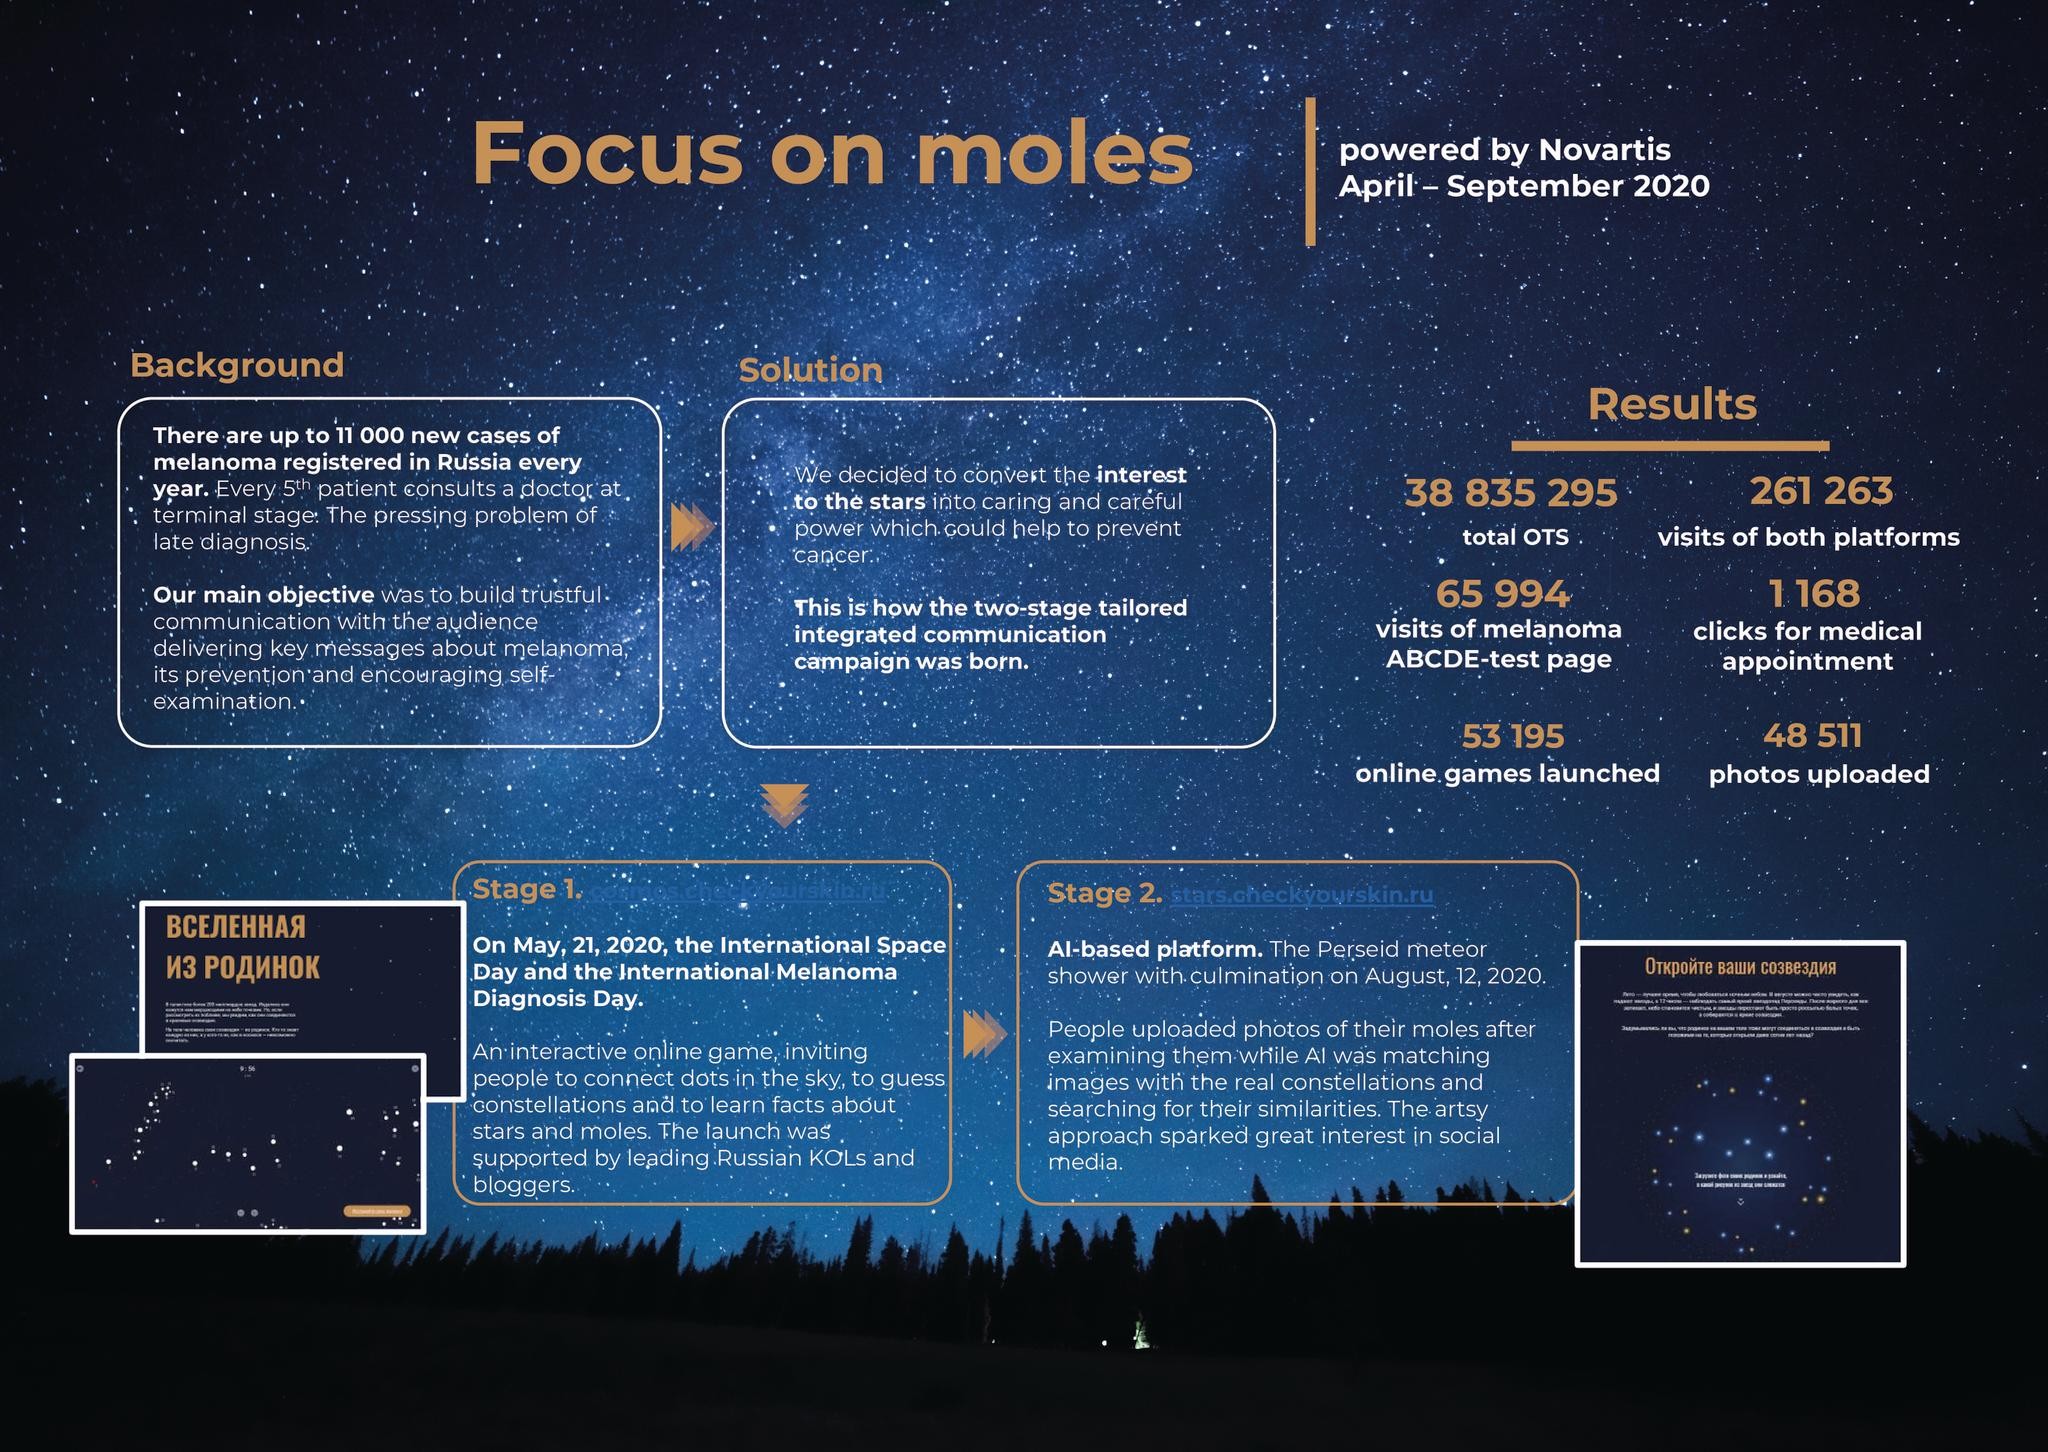 Novartis: Focus on moles